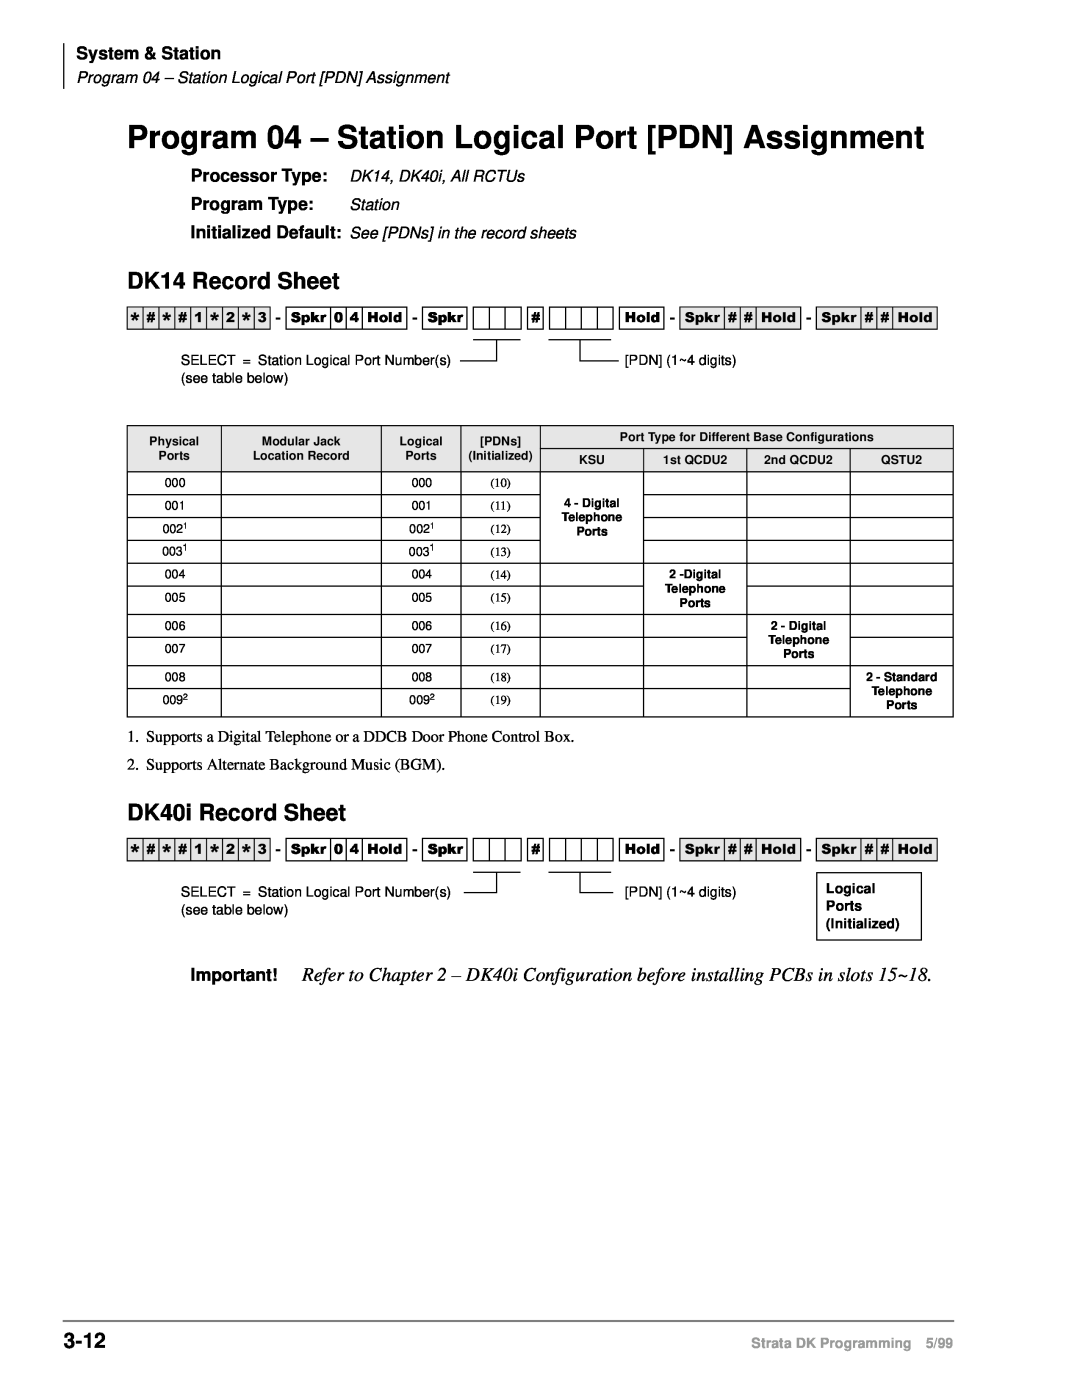 Toshiba dk14 Program 04 – Station Logical Port PDN Assignment, DK14 Record Sheet, DK40i Record Sheet, 3-12, PDN 1~4 digits 